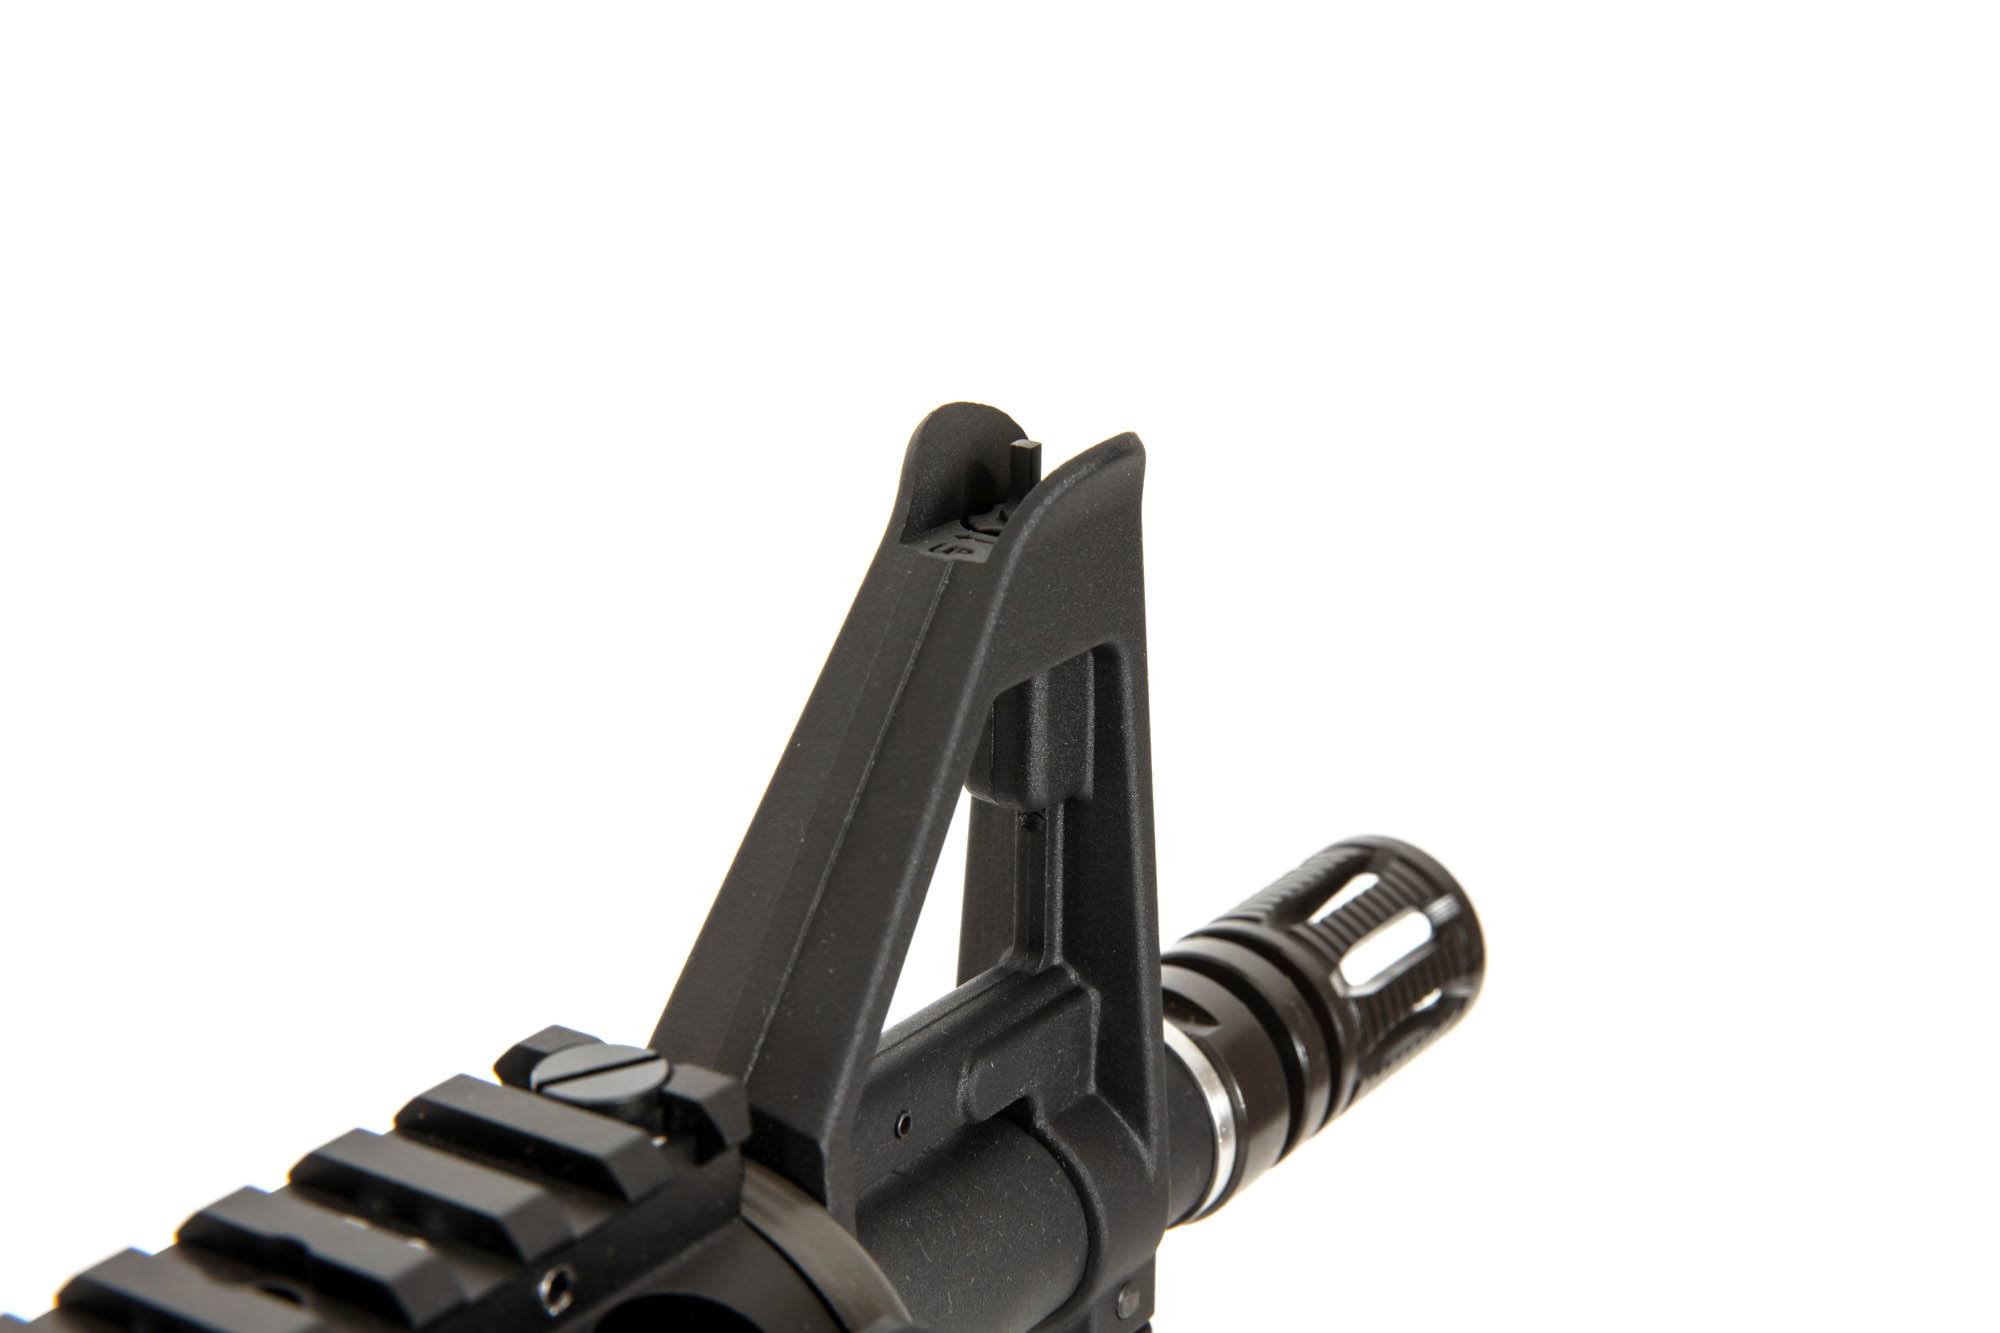 VF1-LMK18M0 (Colt MK18 MOD 0) Carbine Replica by VFC on Airsoft Mania Europe